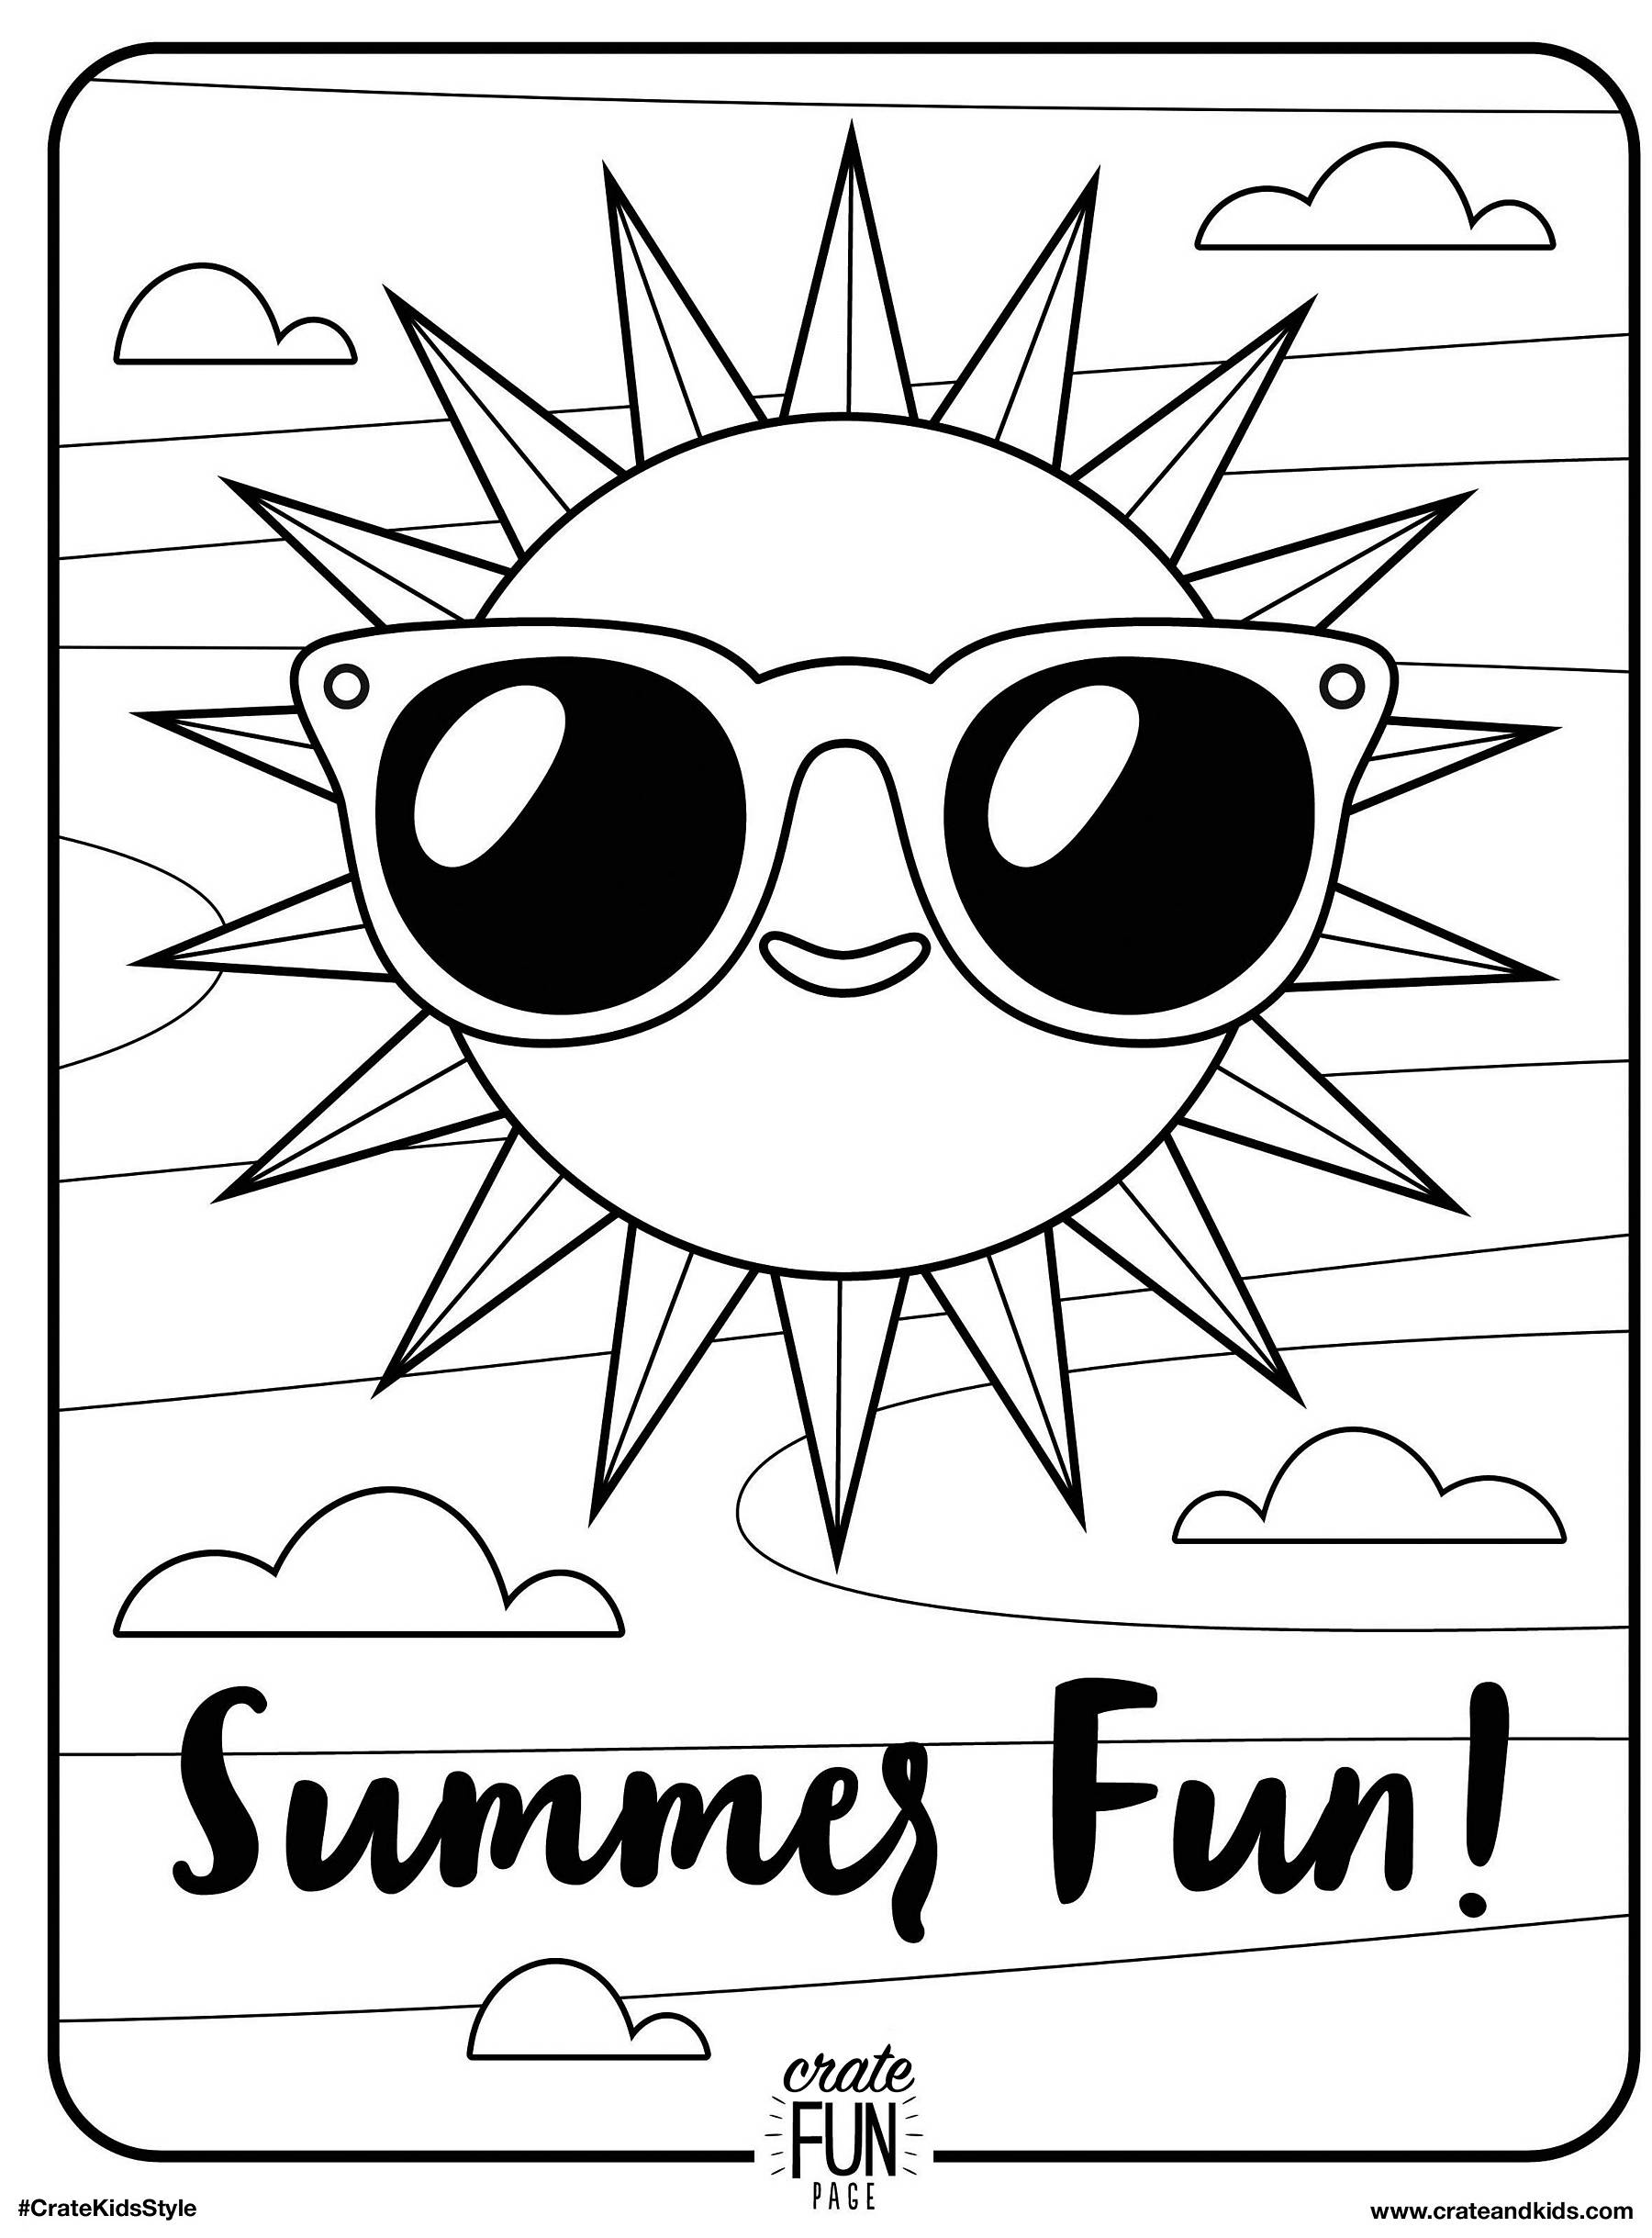 Kids summer fun free printable coloring page crate kids